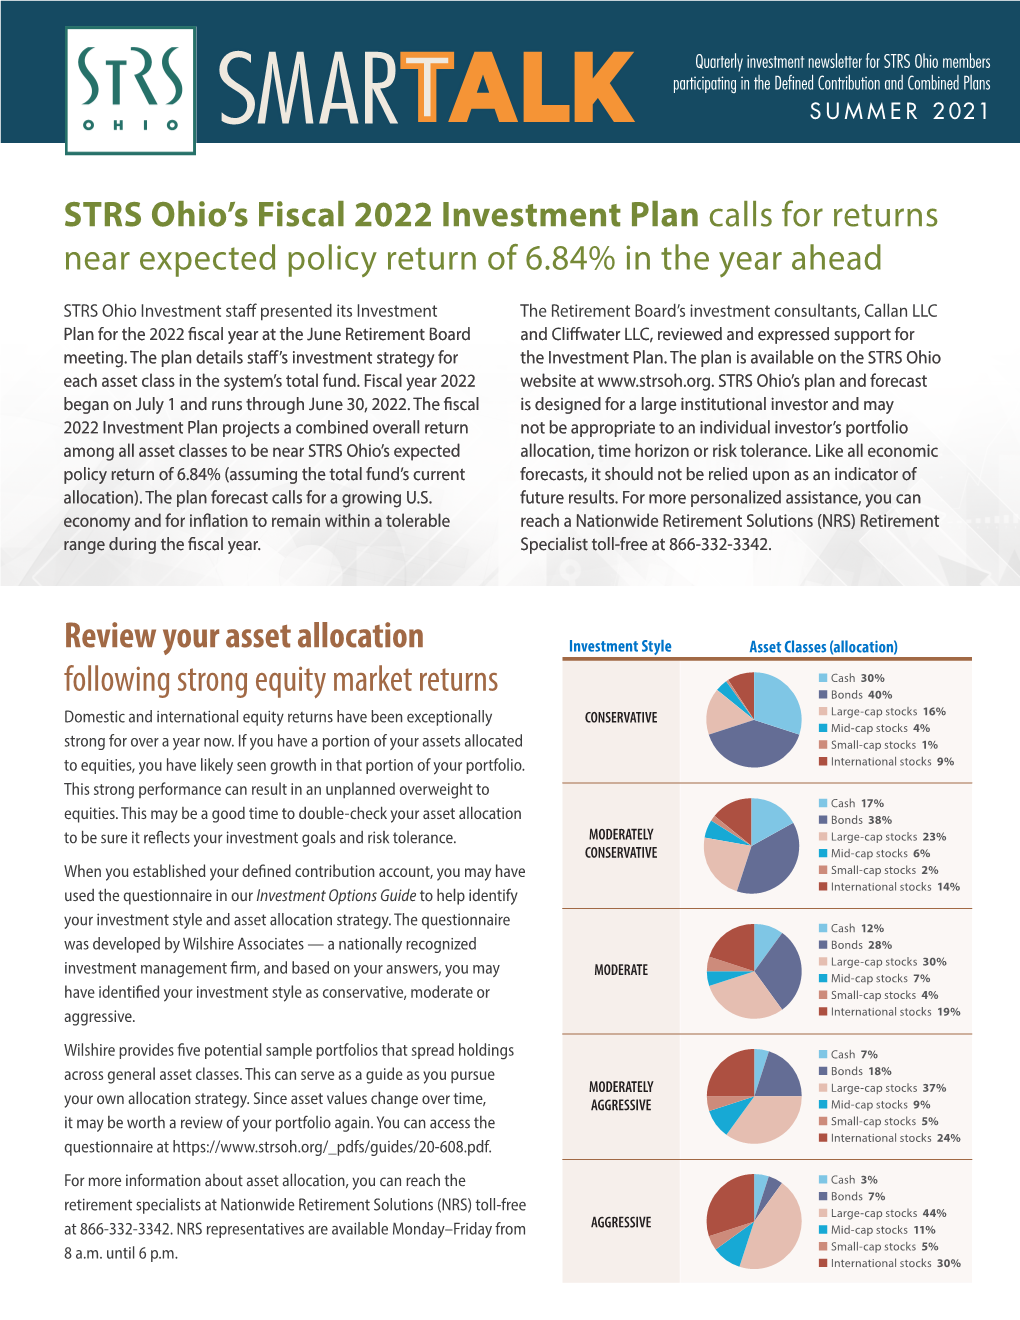 STRS Ohio Smarttalk Newsletter